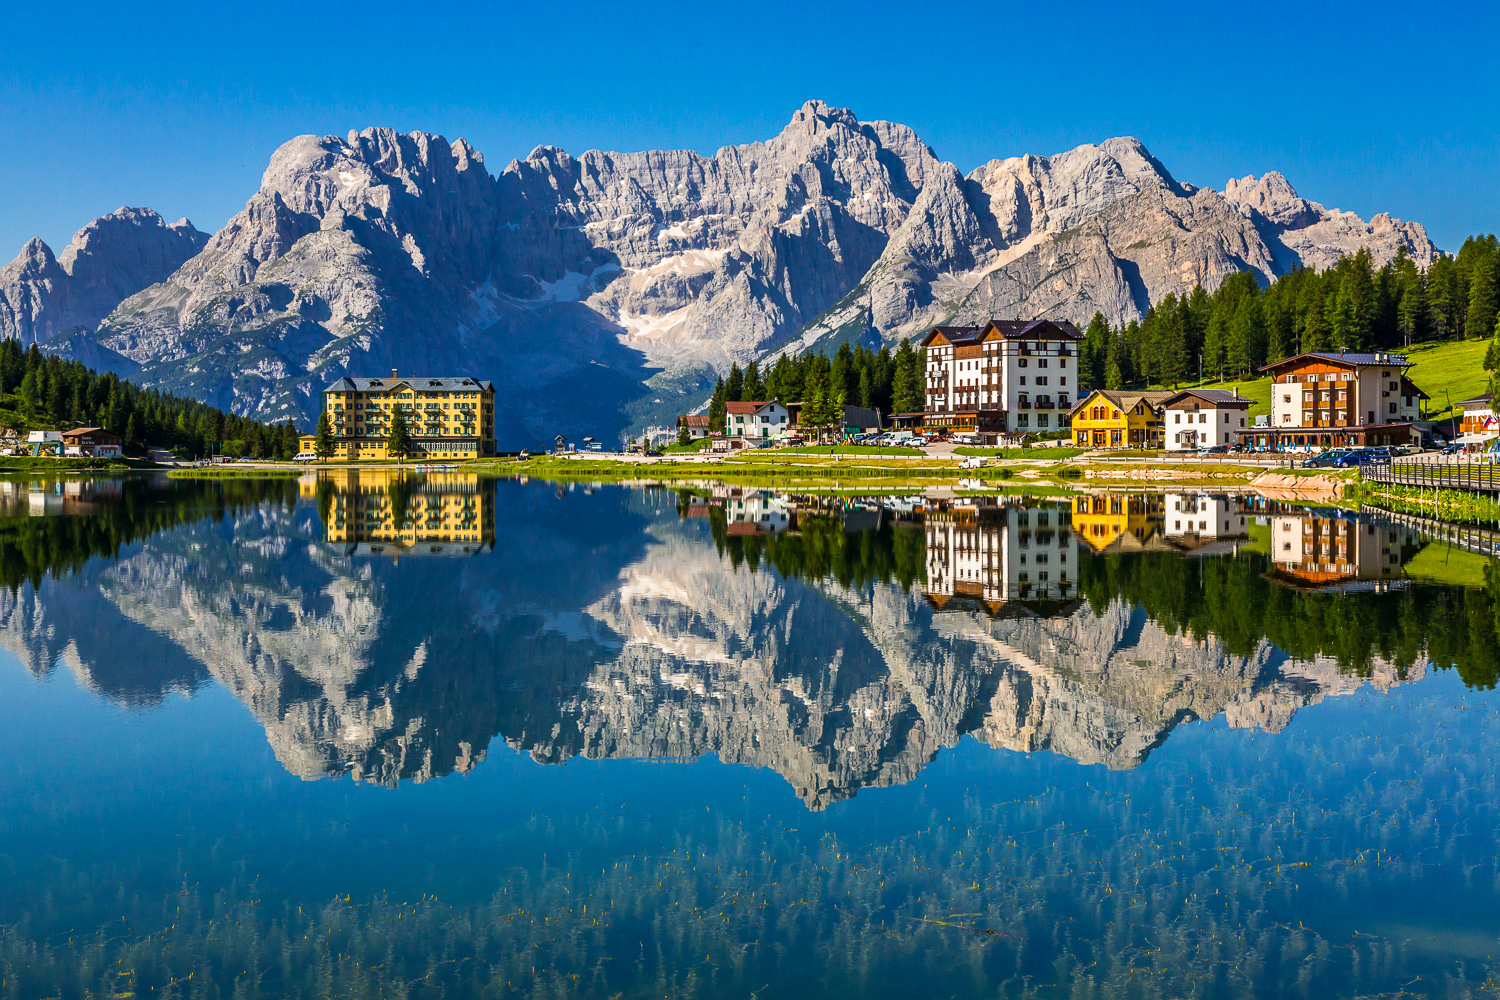 Italy's Dolomite R. Ian Lloyd